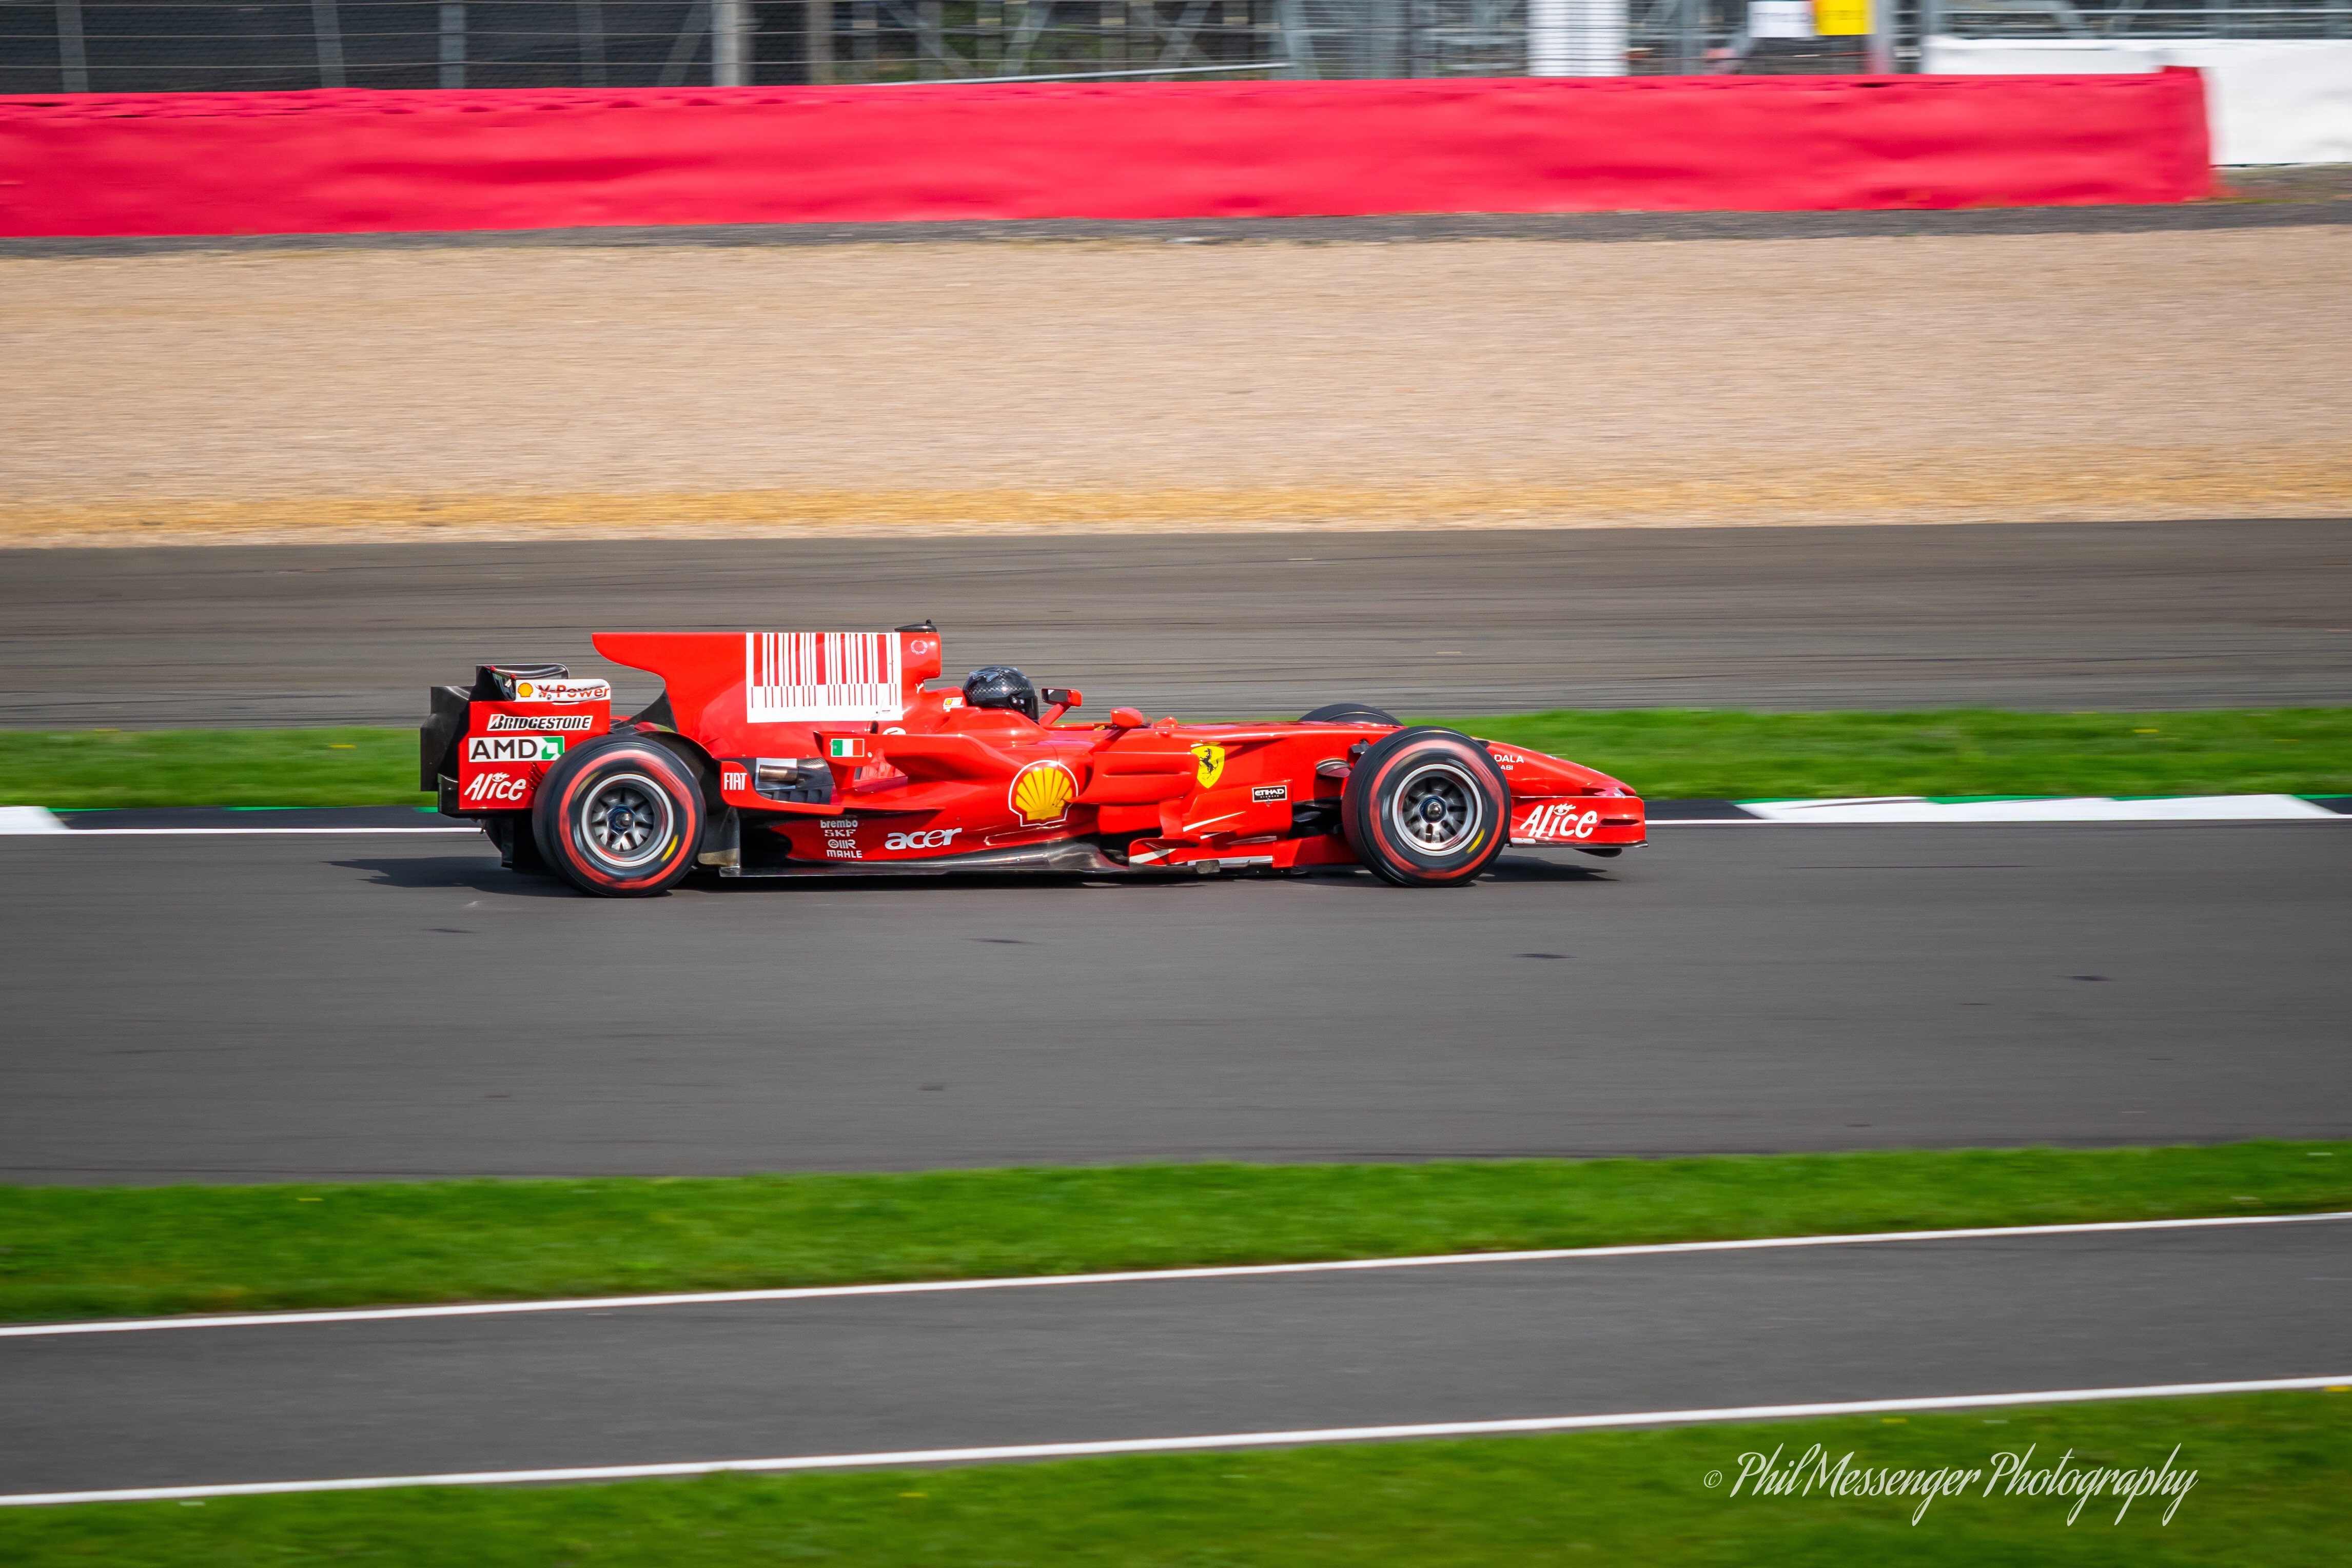 2008 Ferrari formula one racing car